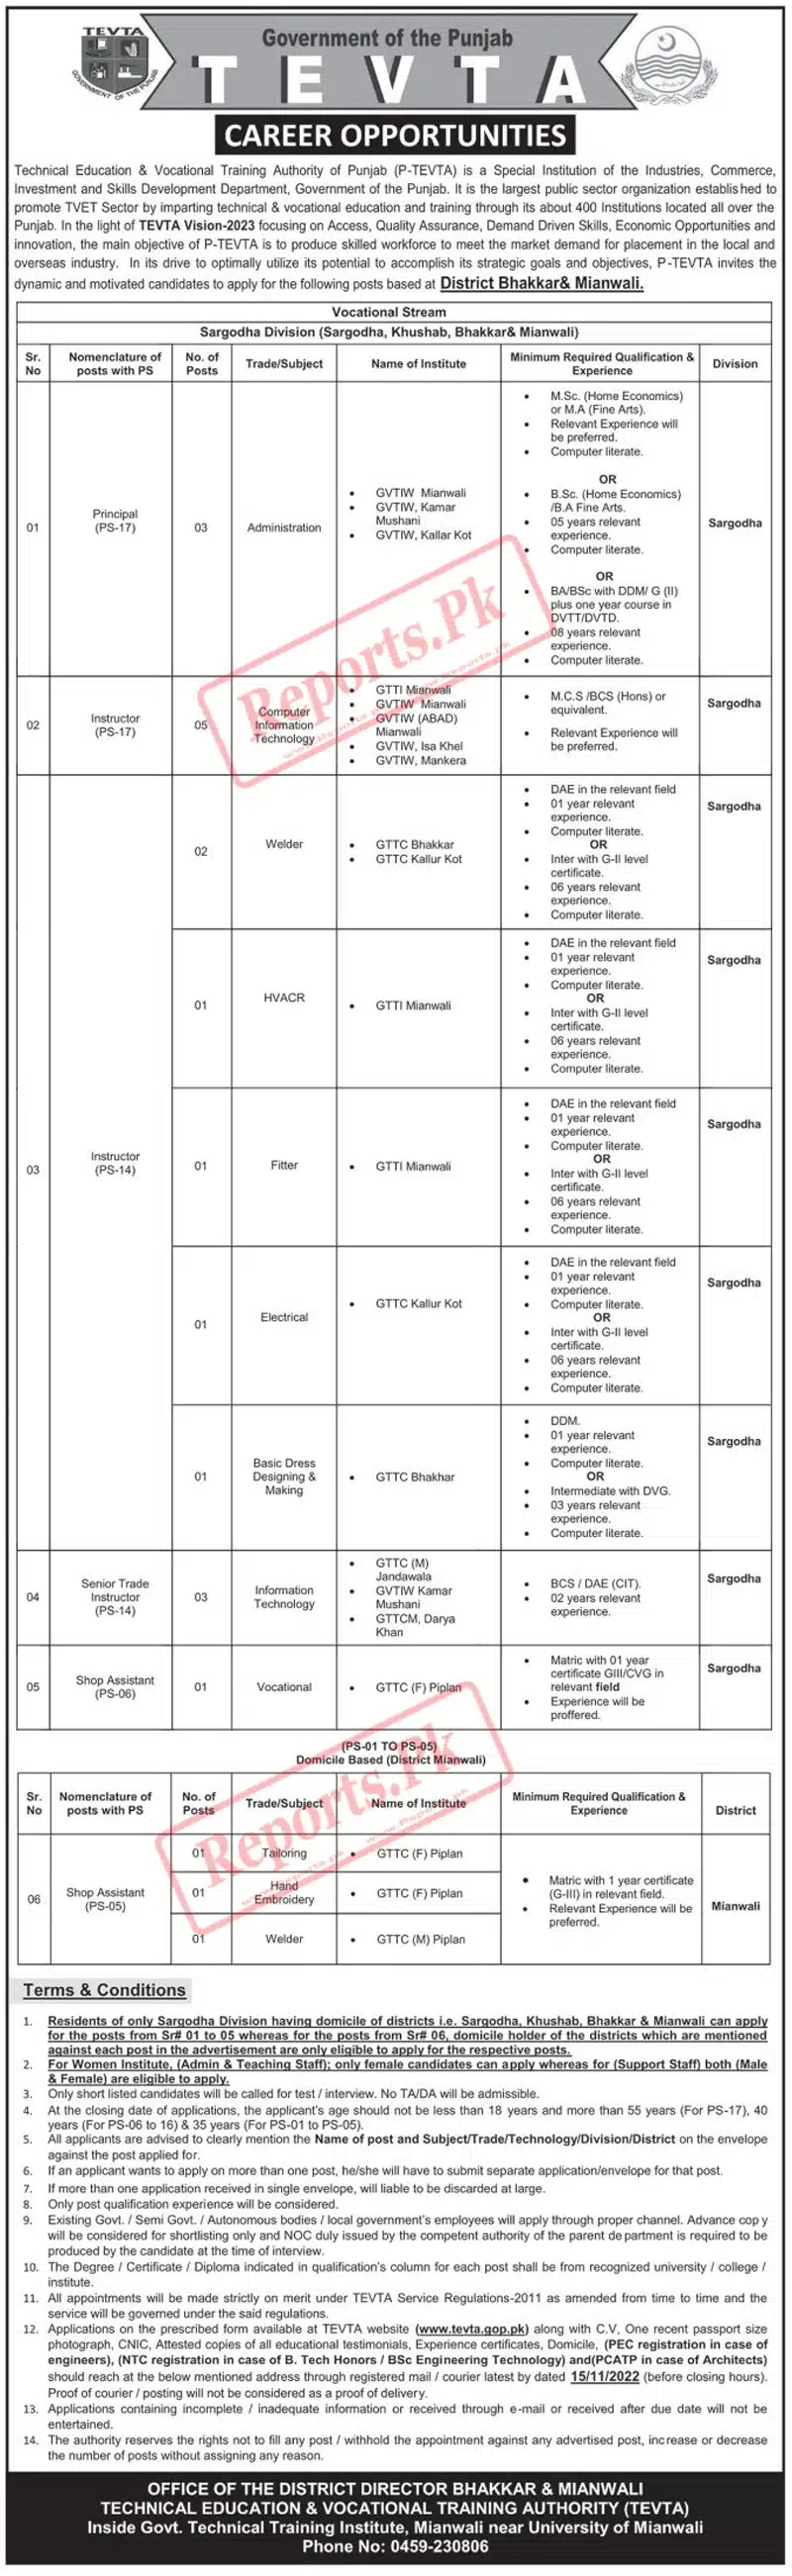 TEVTA Jobs in District Sargodha and Mianwali